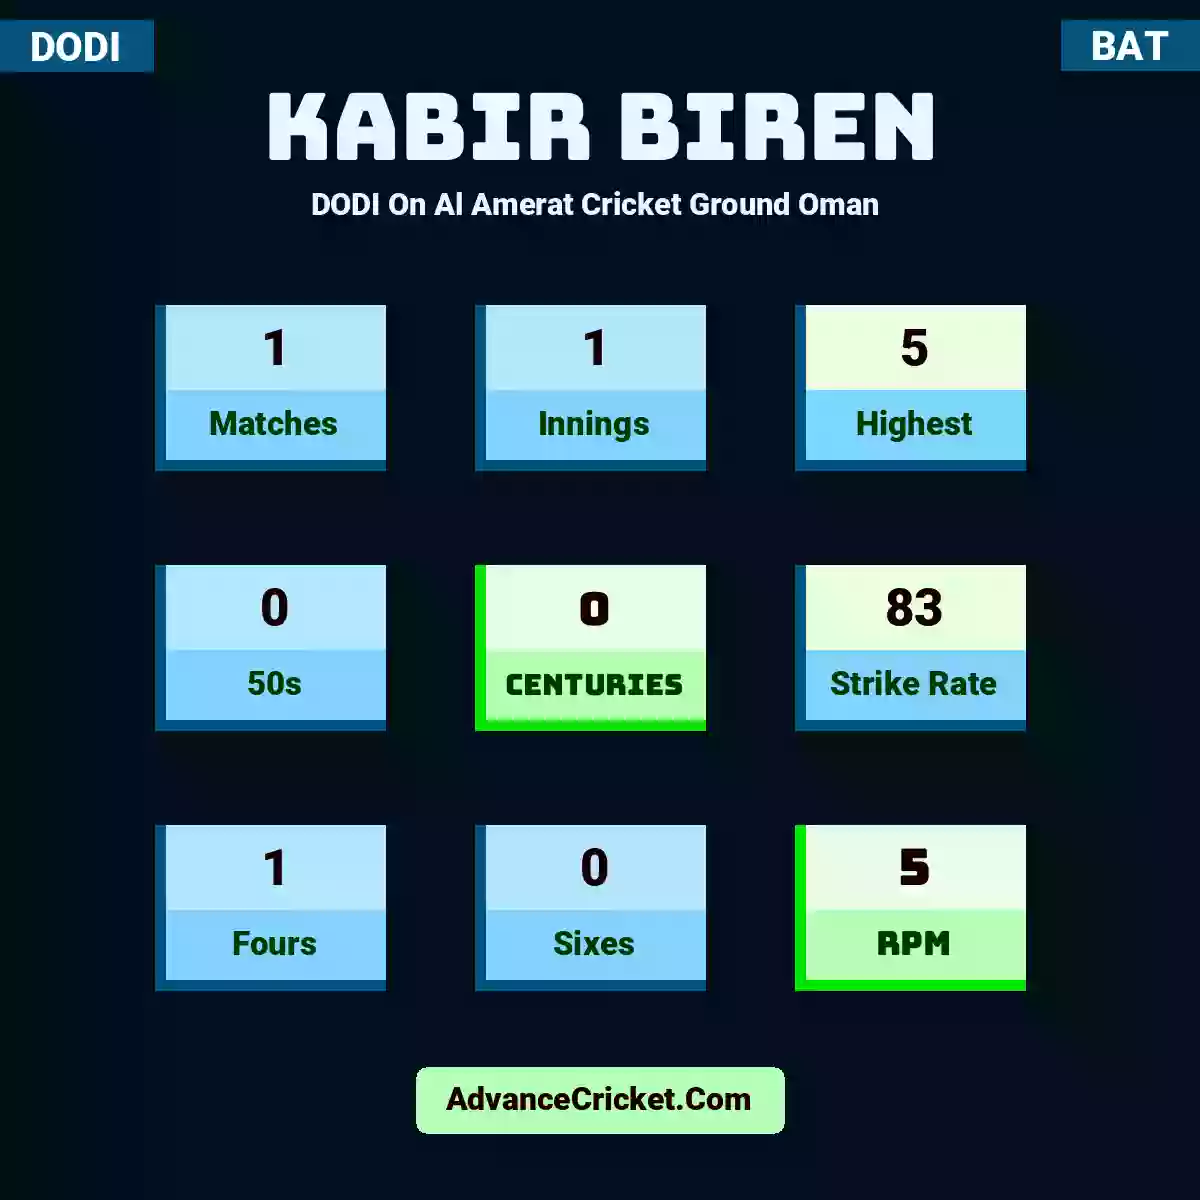 Kabir Biren DODI  On Al Amerat Cricket Ground Oman , Kabir Biren played 1 matches, scored 5 runs as highest, 0 half-centuries, and 0 centuries, with a strike rate of 83. K.Biren hit 1 fours and 0 sixes, with an RPM of 5.